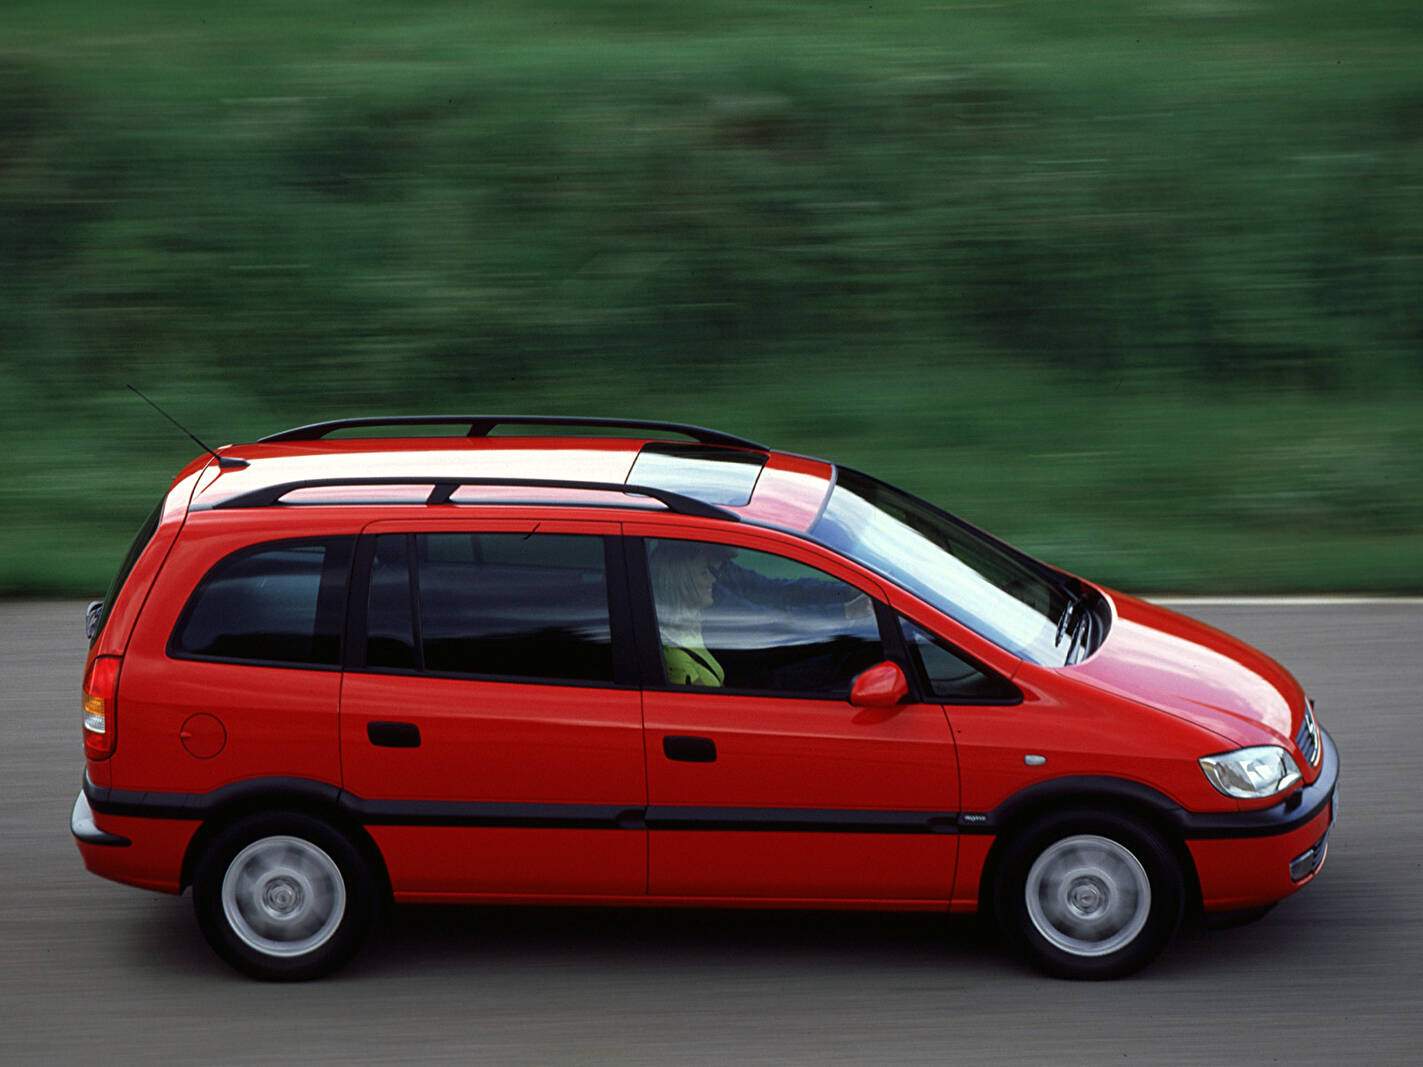 Opel Zafira 2.0 DI 16v (1999-2000),  ajouté par fox58